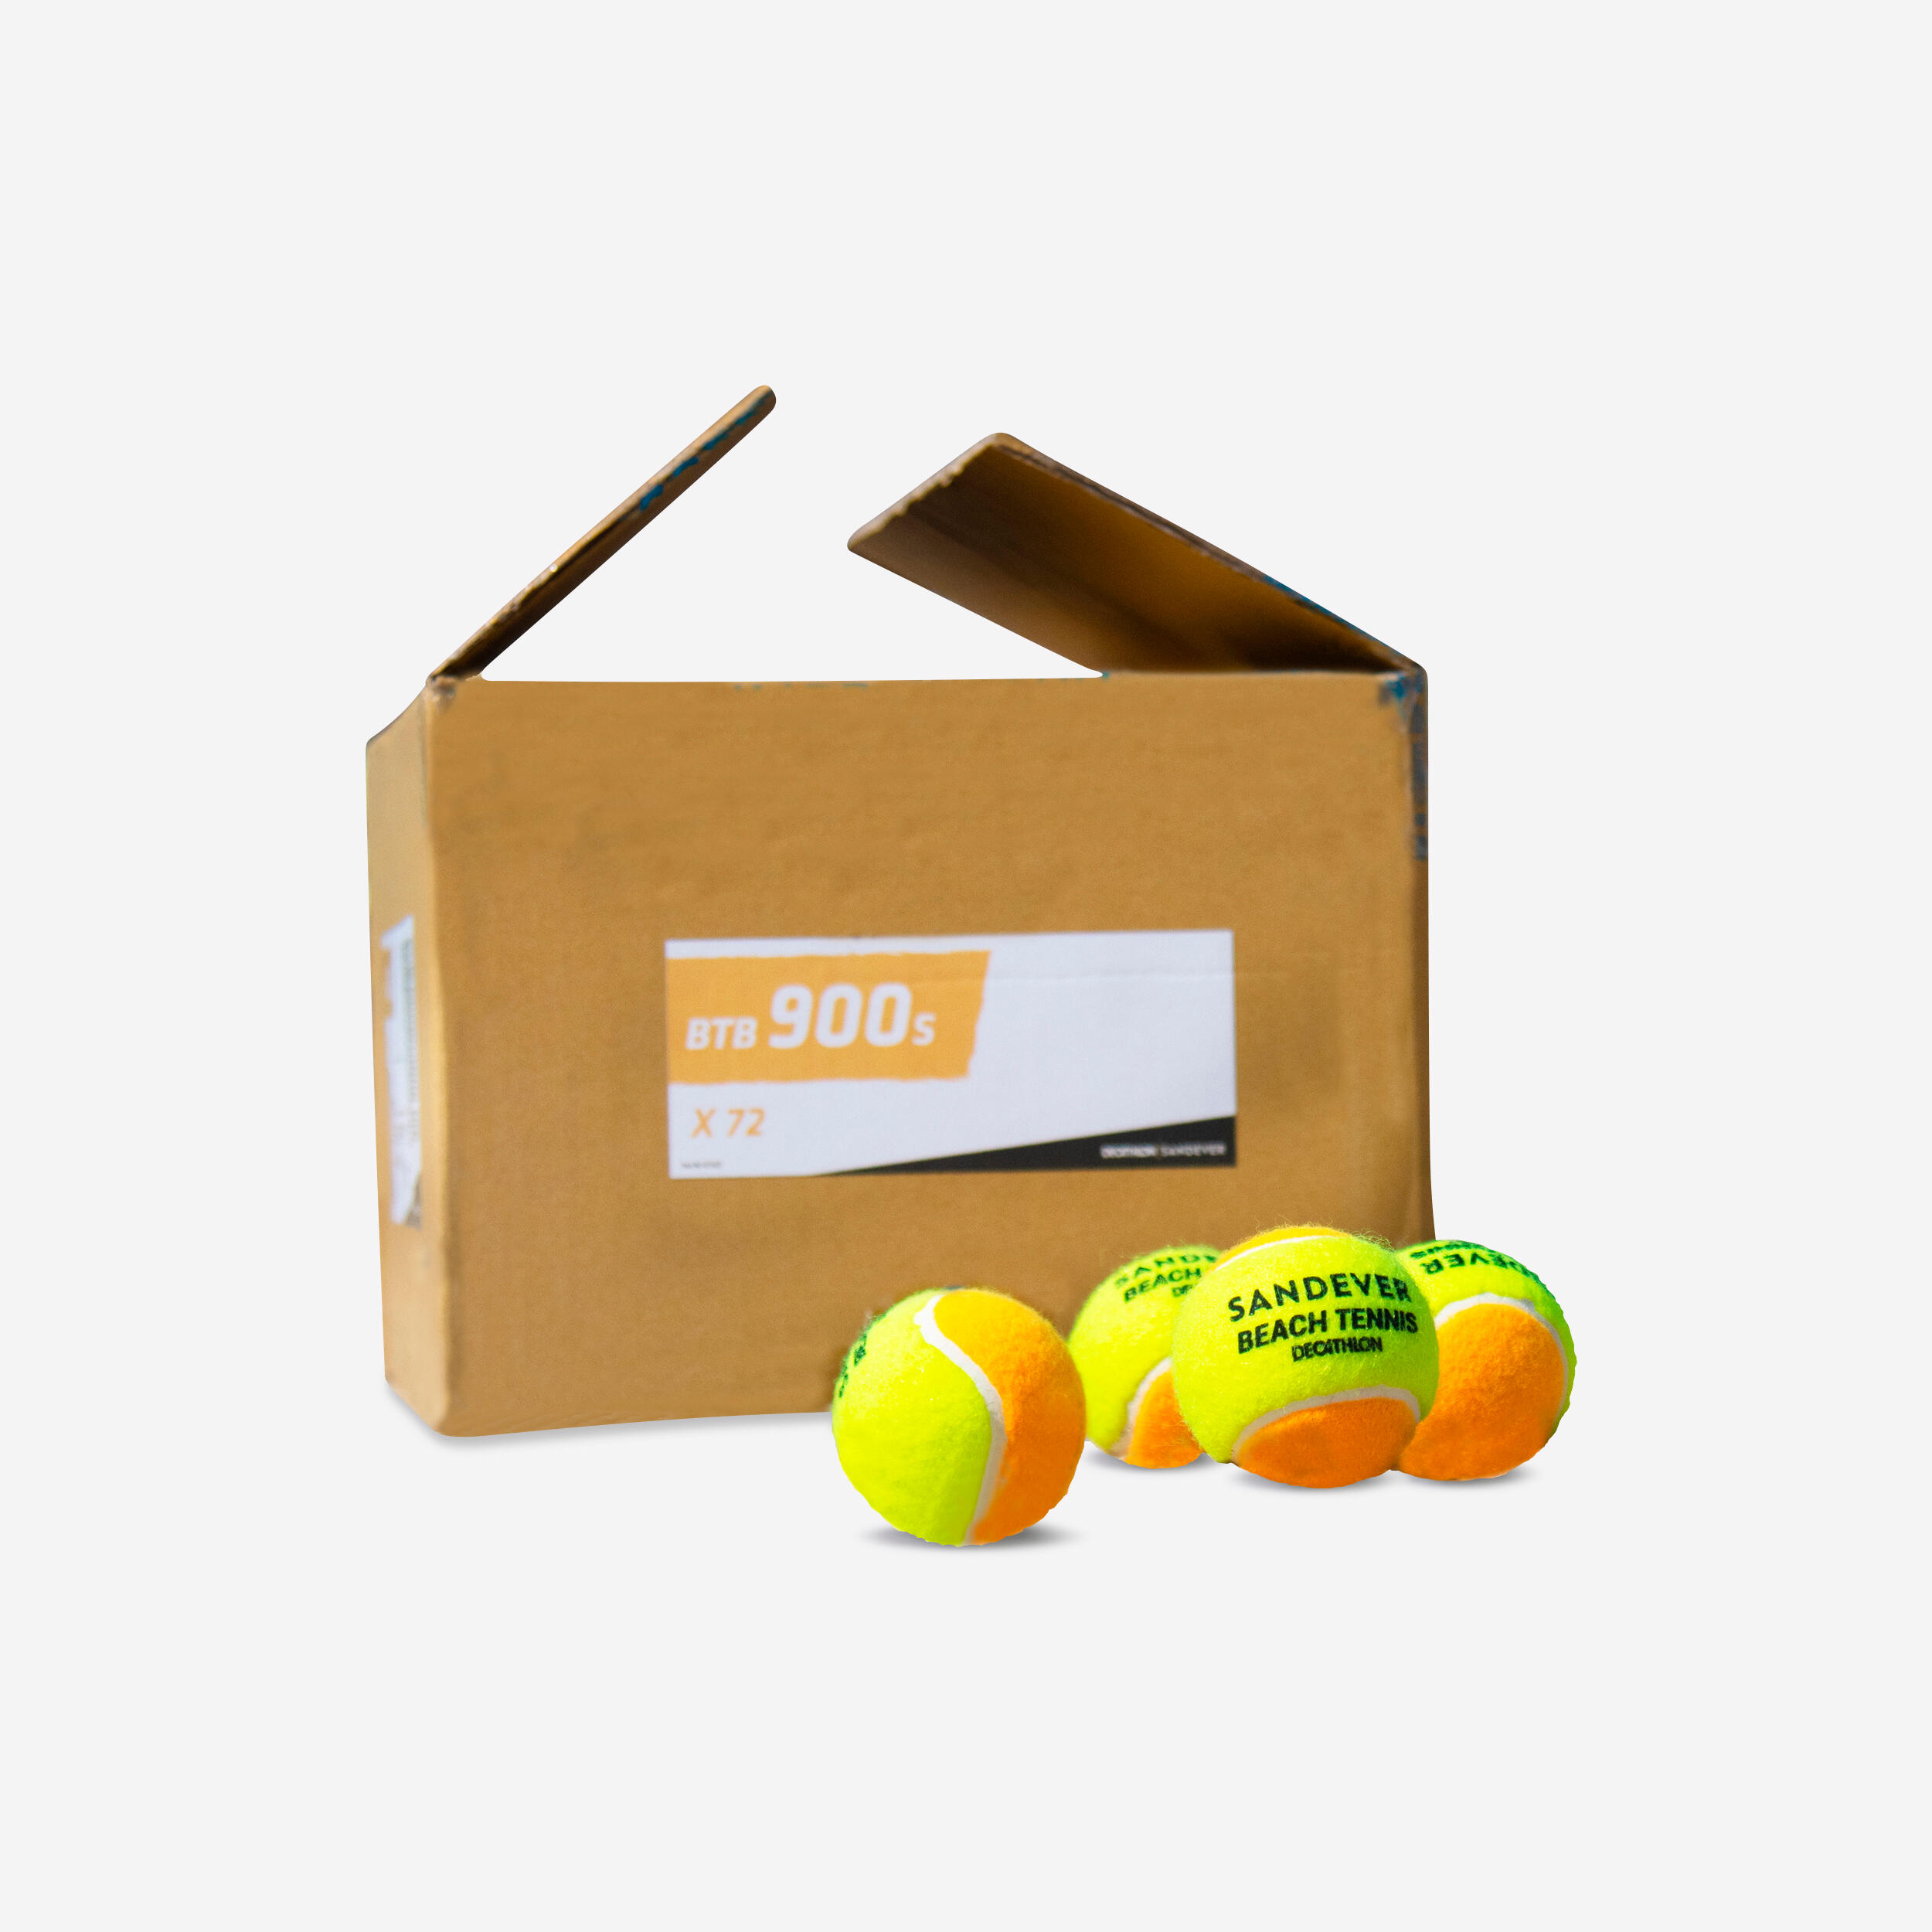 SANDEVER Beach Tennis Ball Set of 72 BTB 900 S - Orange